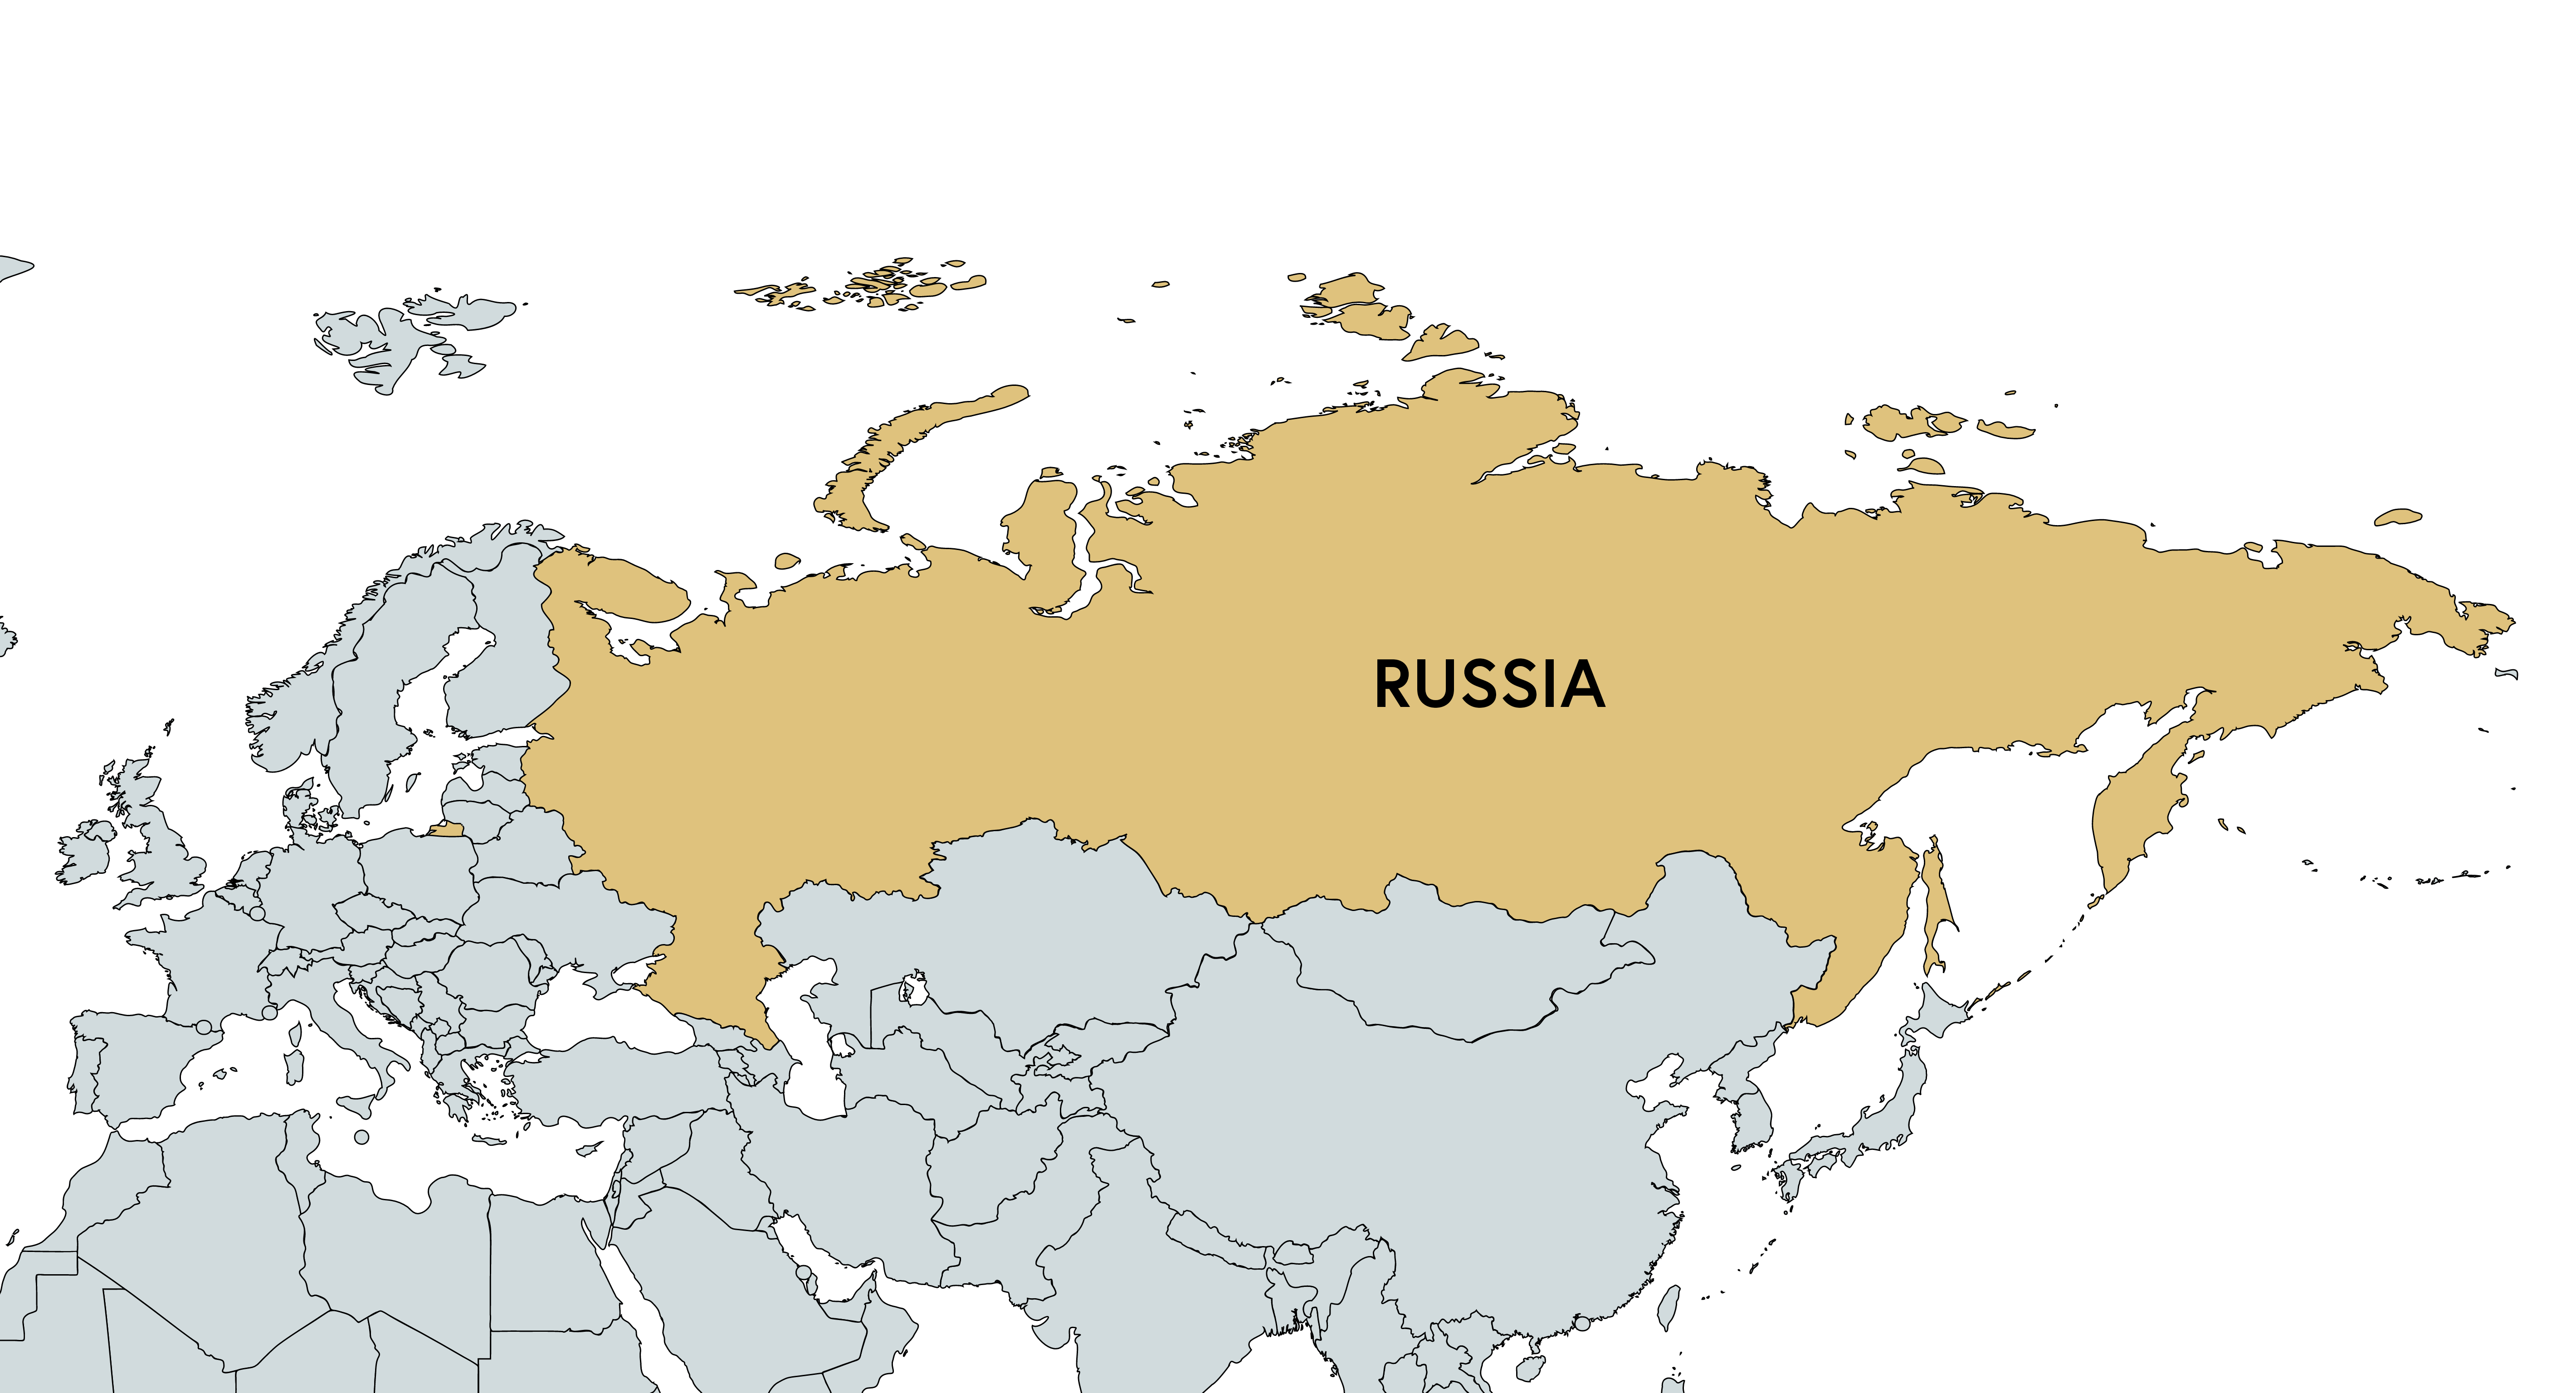 Risk Snapshot - Russia